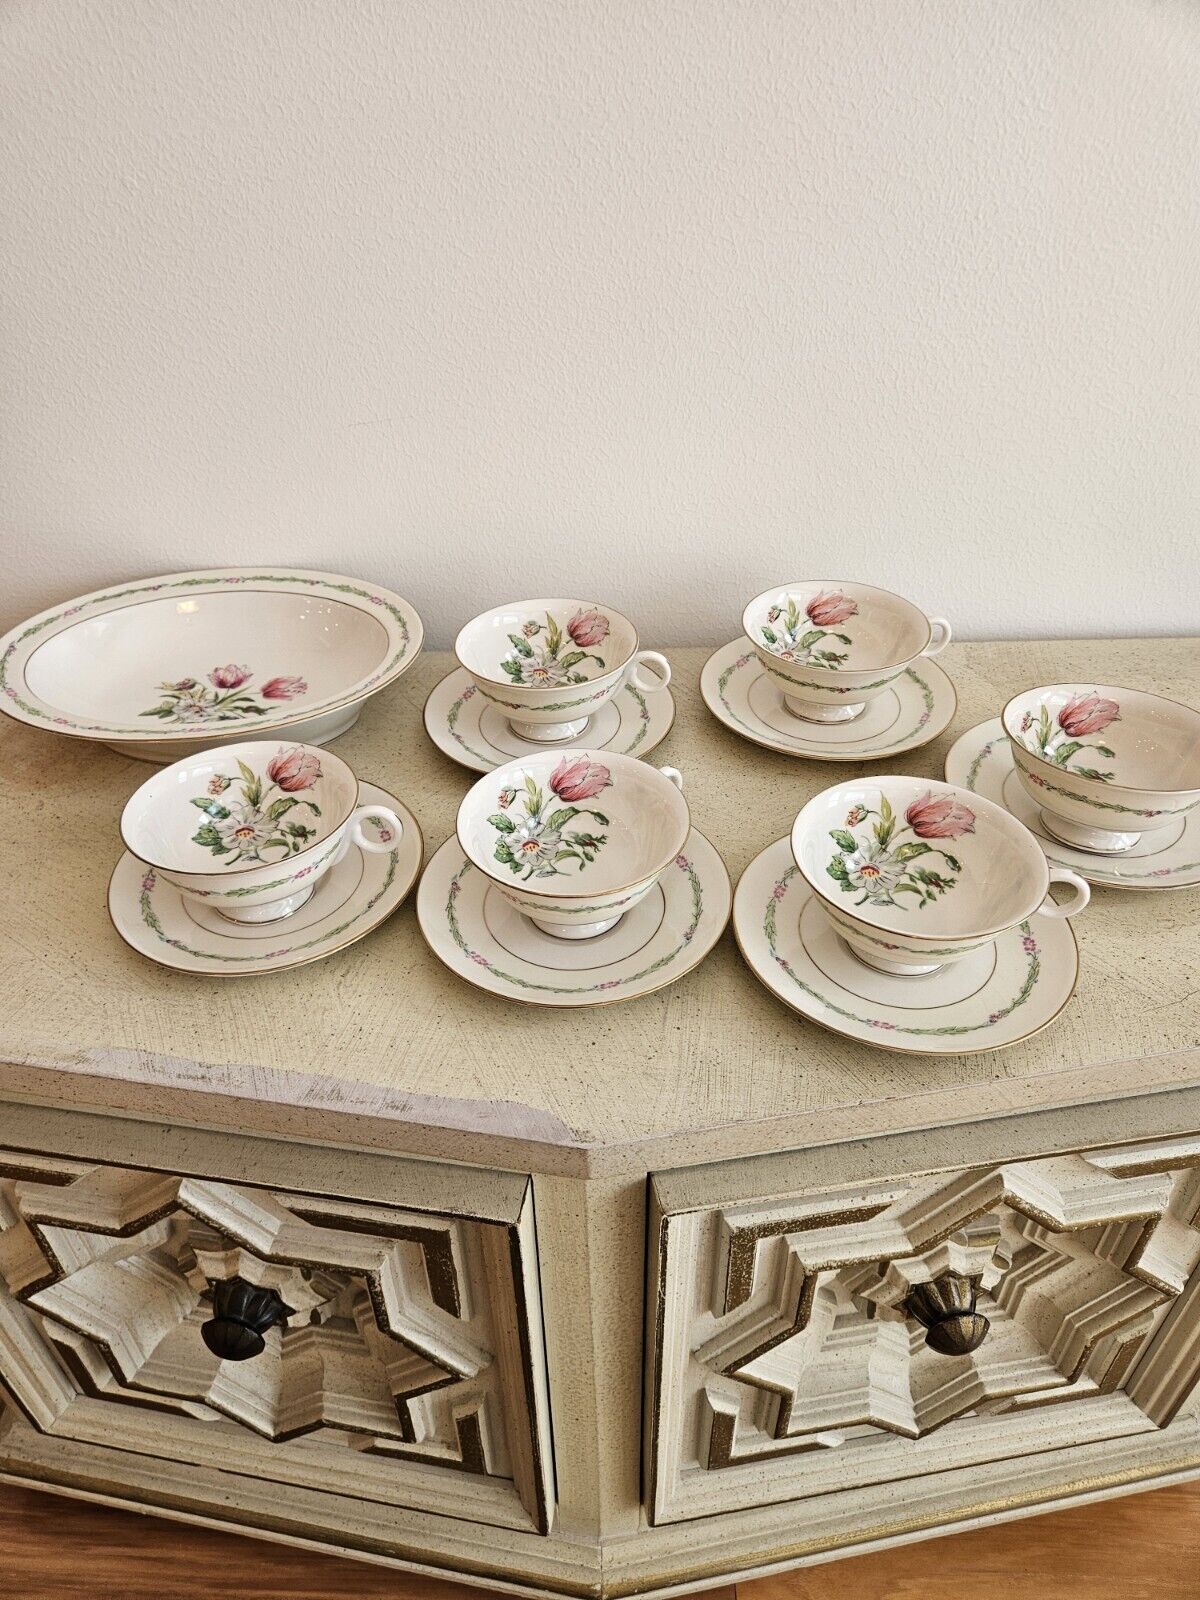 Set of 6 THEODORE HAVILAND Porcelain Cup & Saucer Sets- Garden Flowers 1 Plate